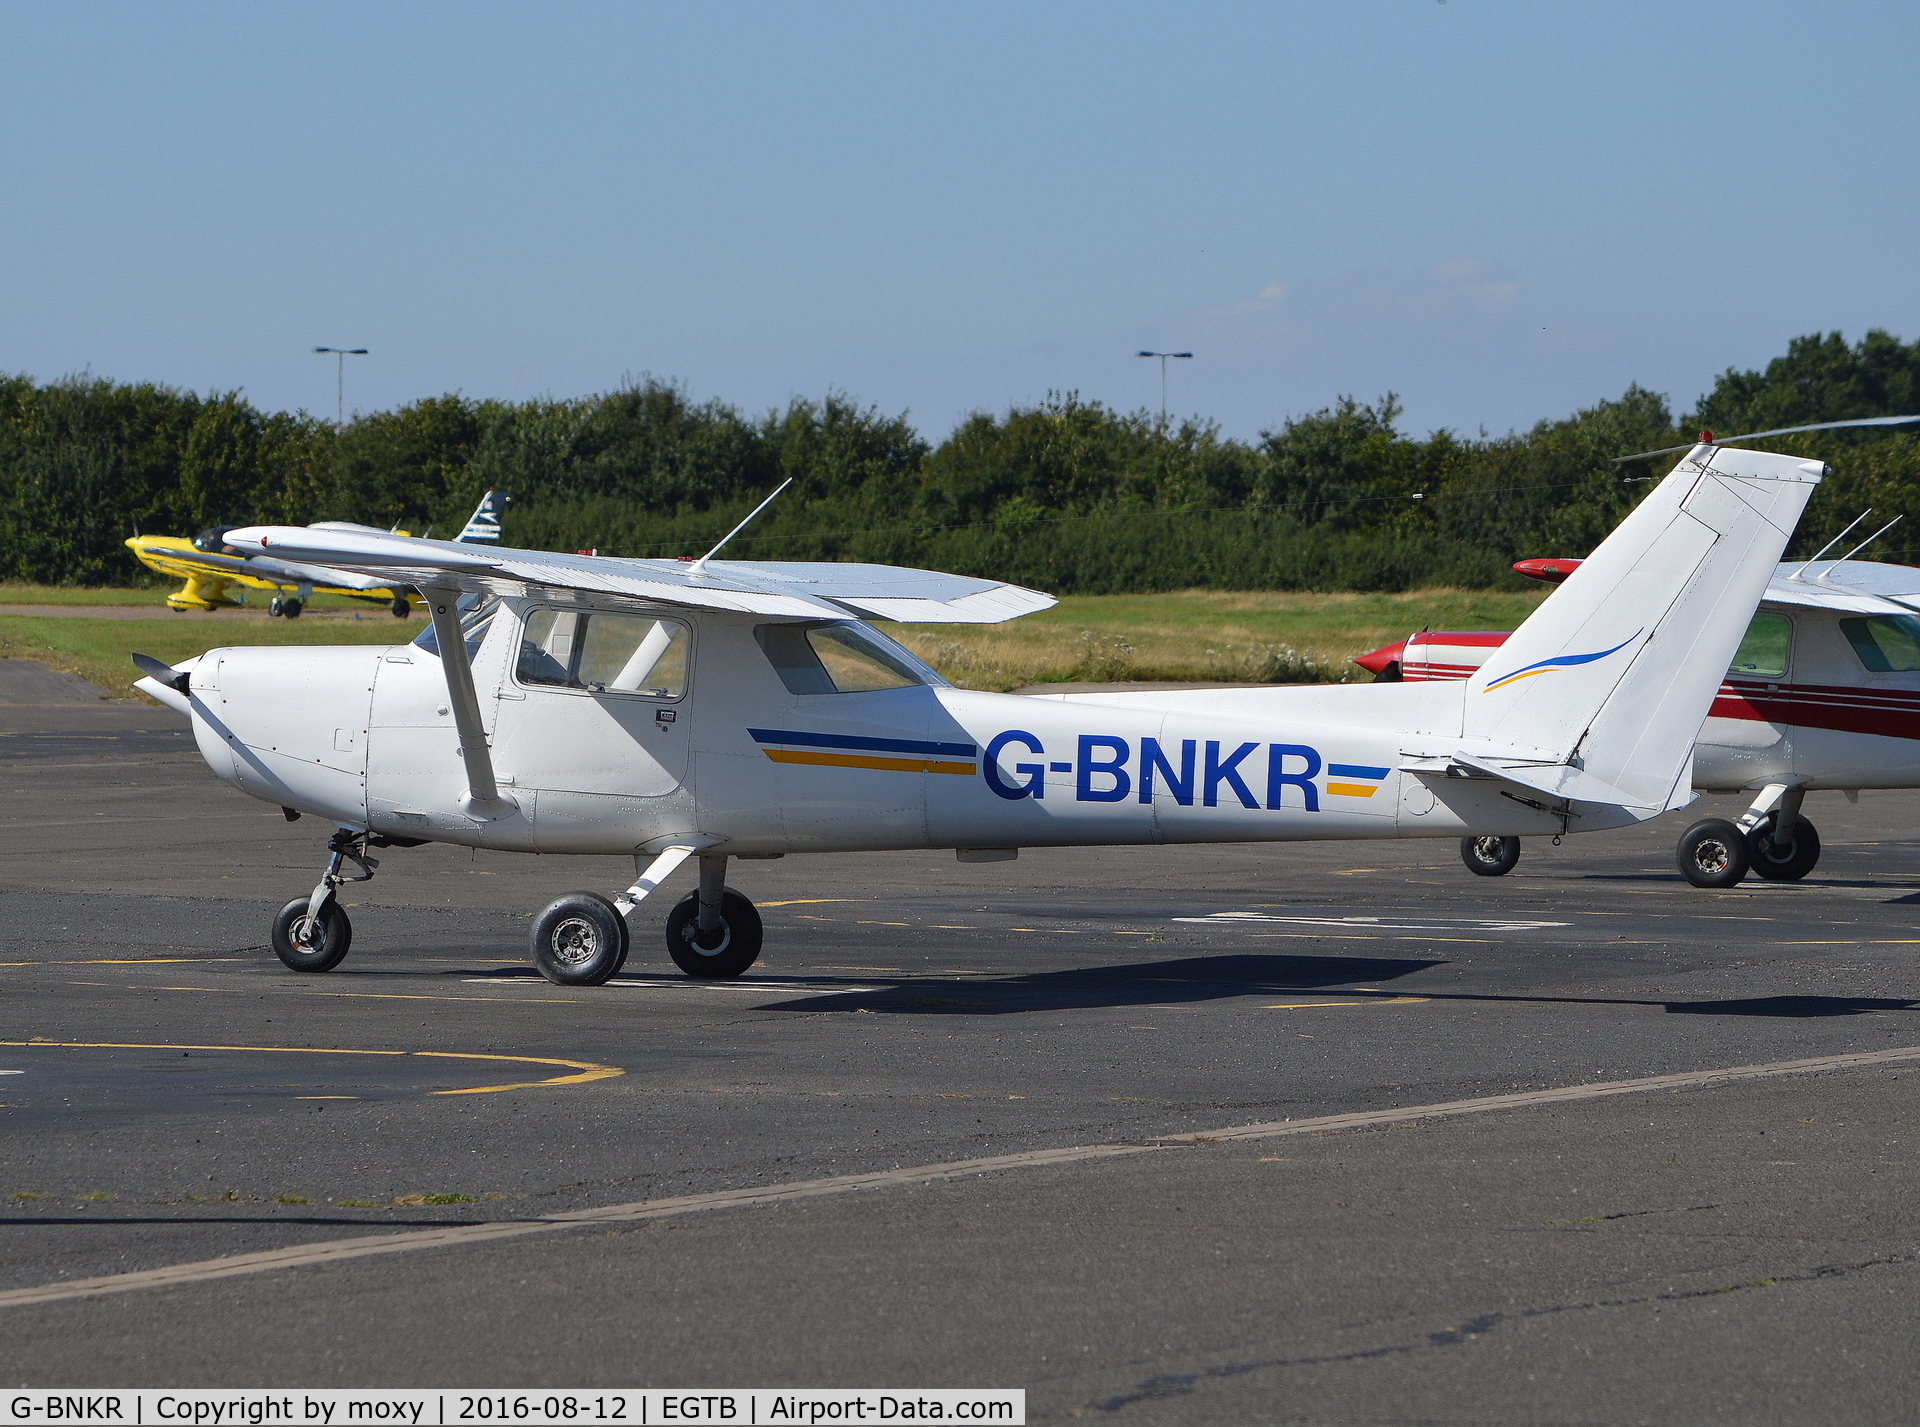 G-BNKR, 1978 Cessna 152 C/N 152-81284, Cessna 152 at Wycombe Air Park. Ex N49458